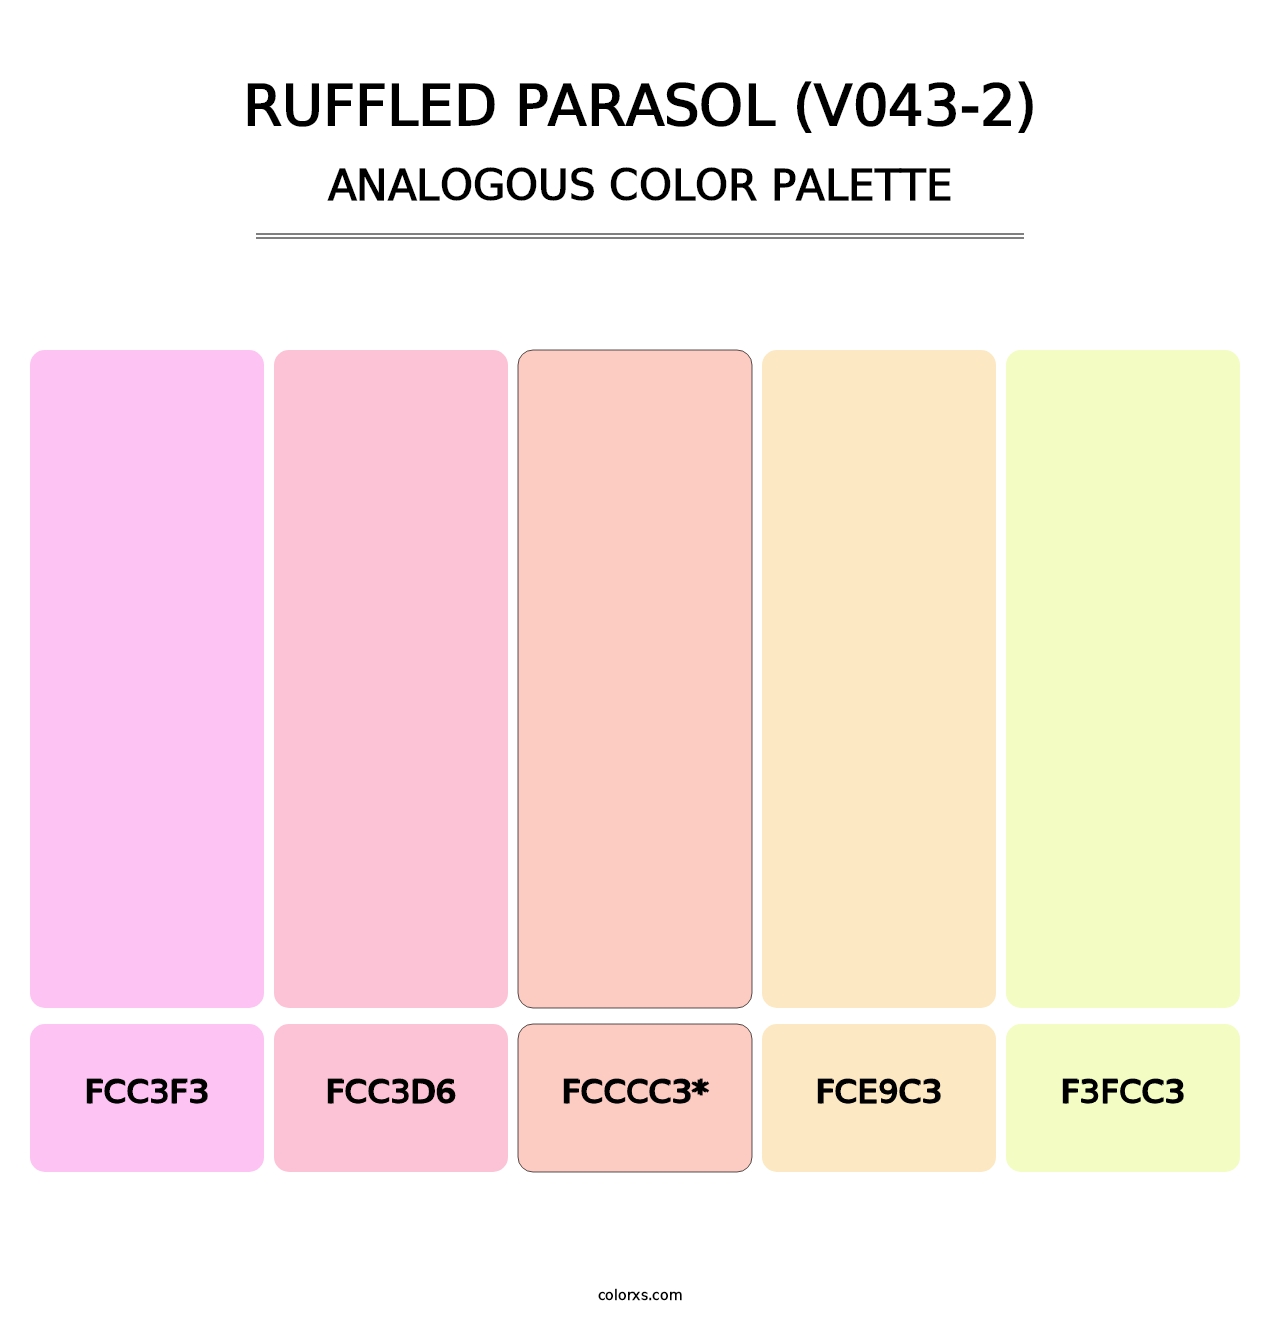 Ruffled Parasol (V043-2) - Analogous Color Palette